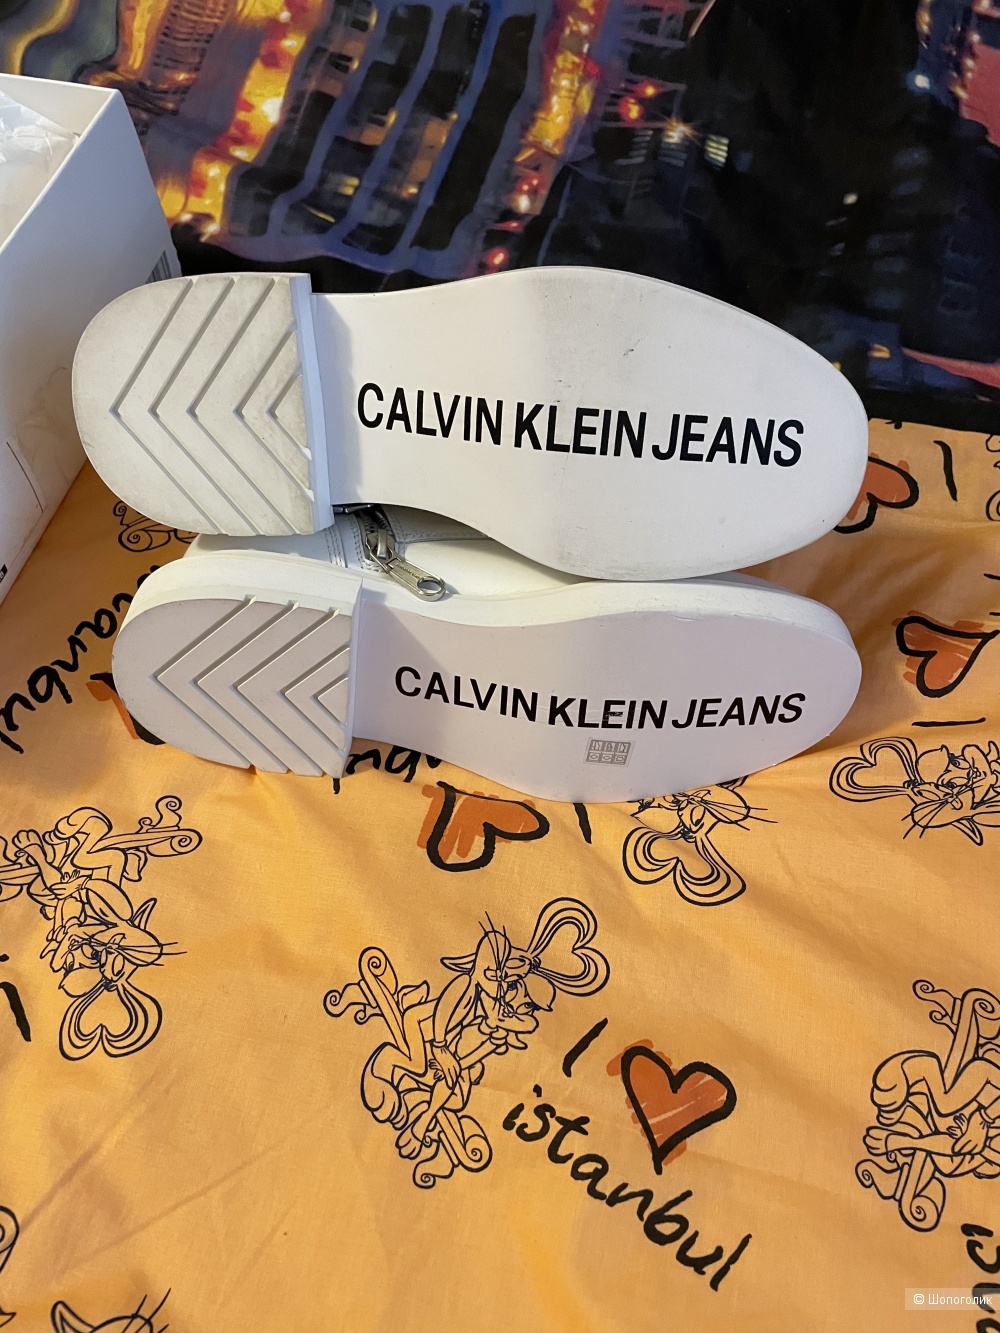 Ботинки Calvin Klein раз.38